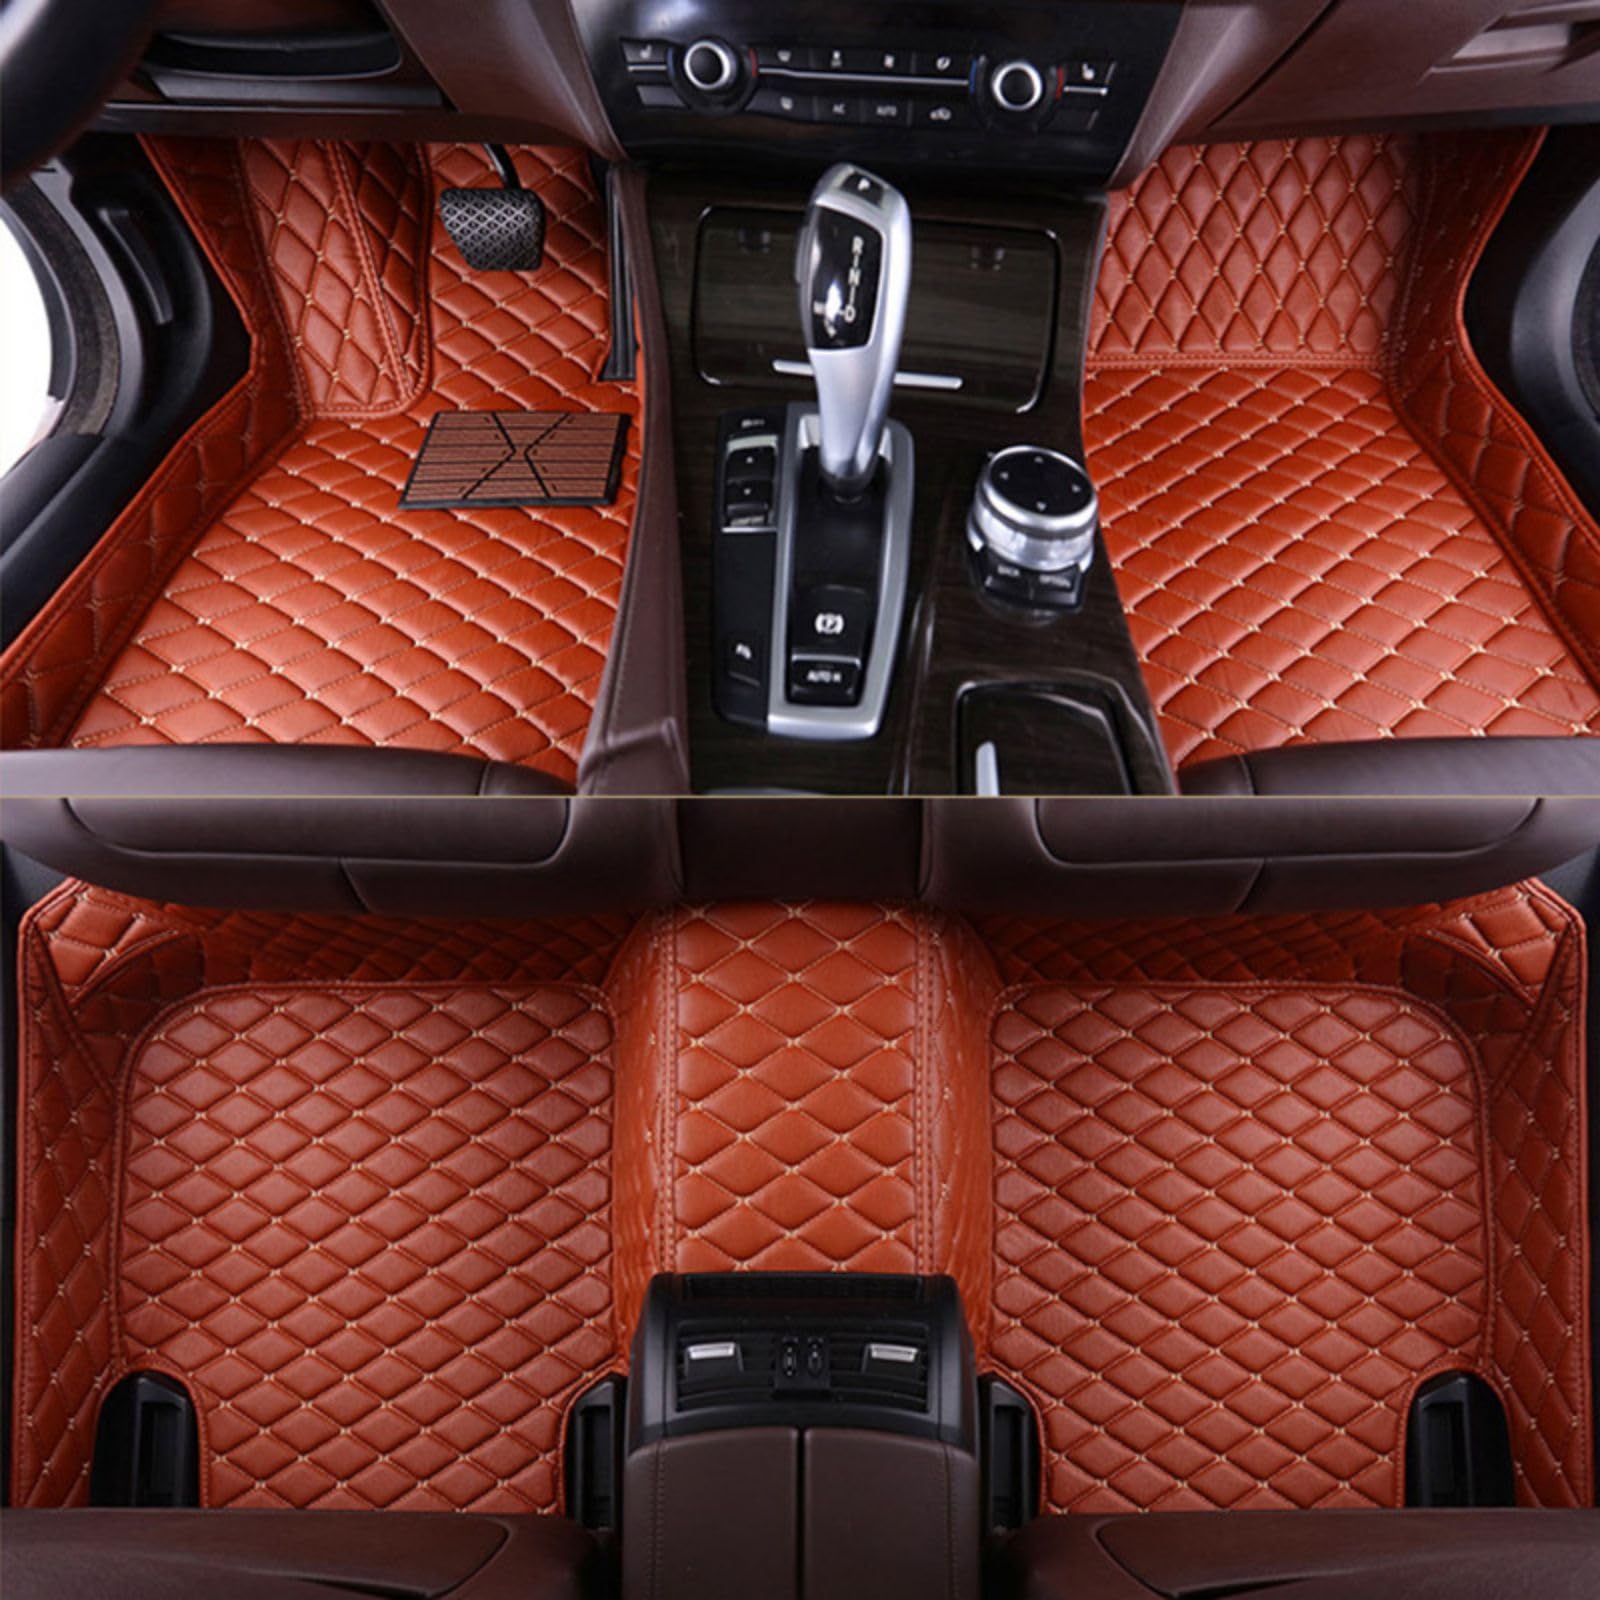 Fussmatten Auto für Jaguar E-PACE 2017-2023, PU-Leder Auto Fussmatten Set wasserdichte rutschfeste Teppich Interieur-Accessoires,Brown von LMSMGS